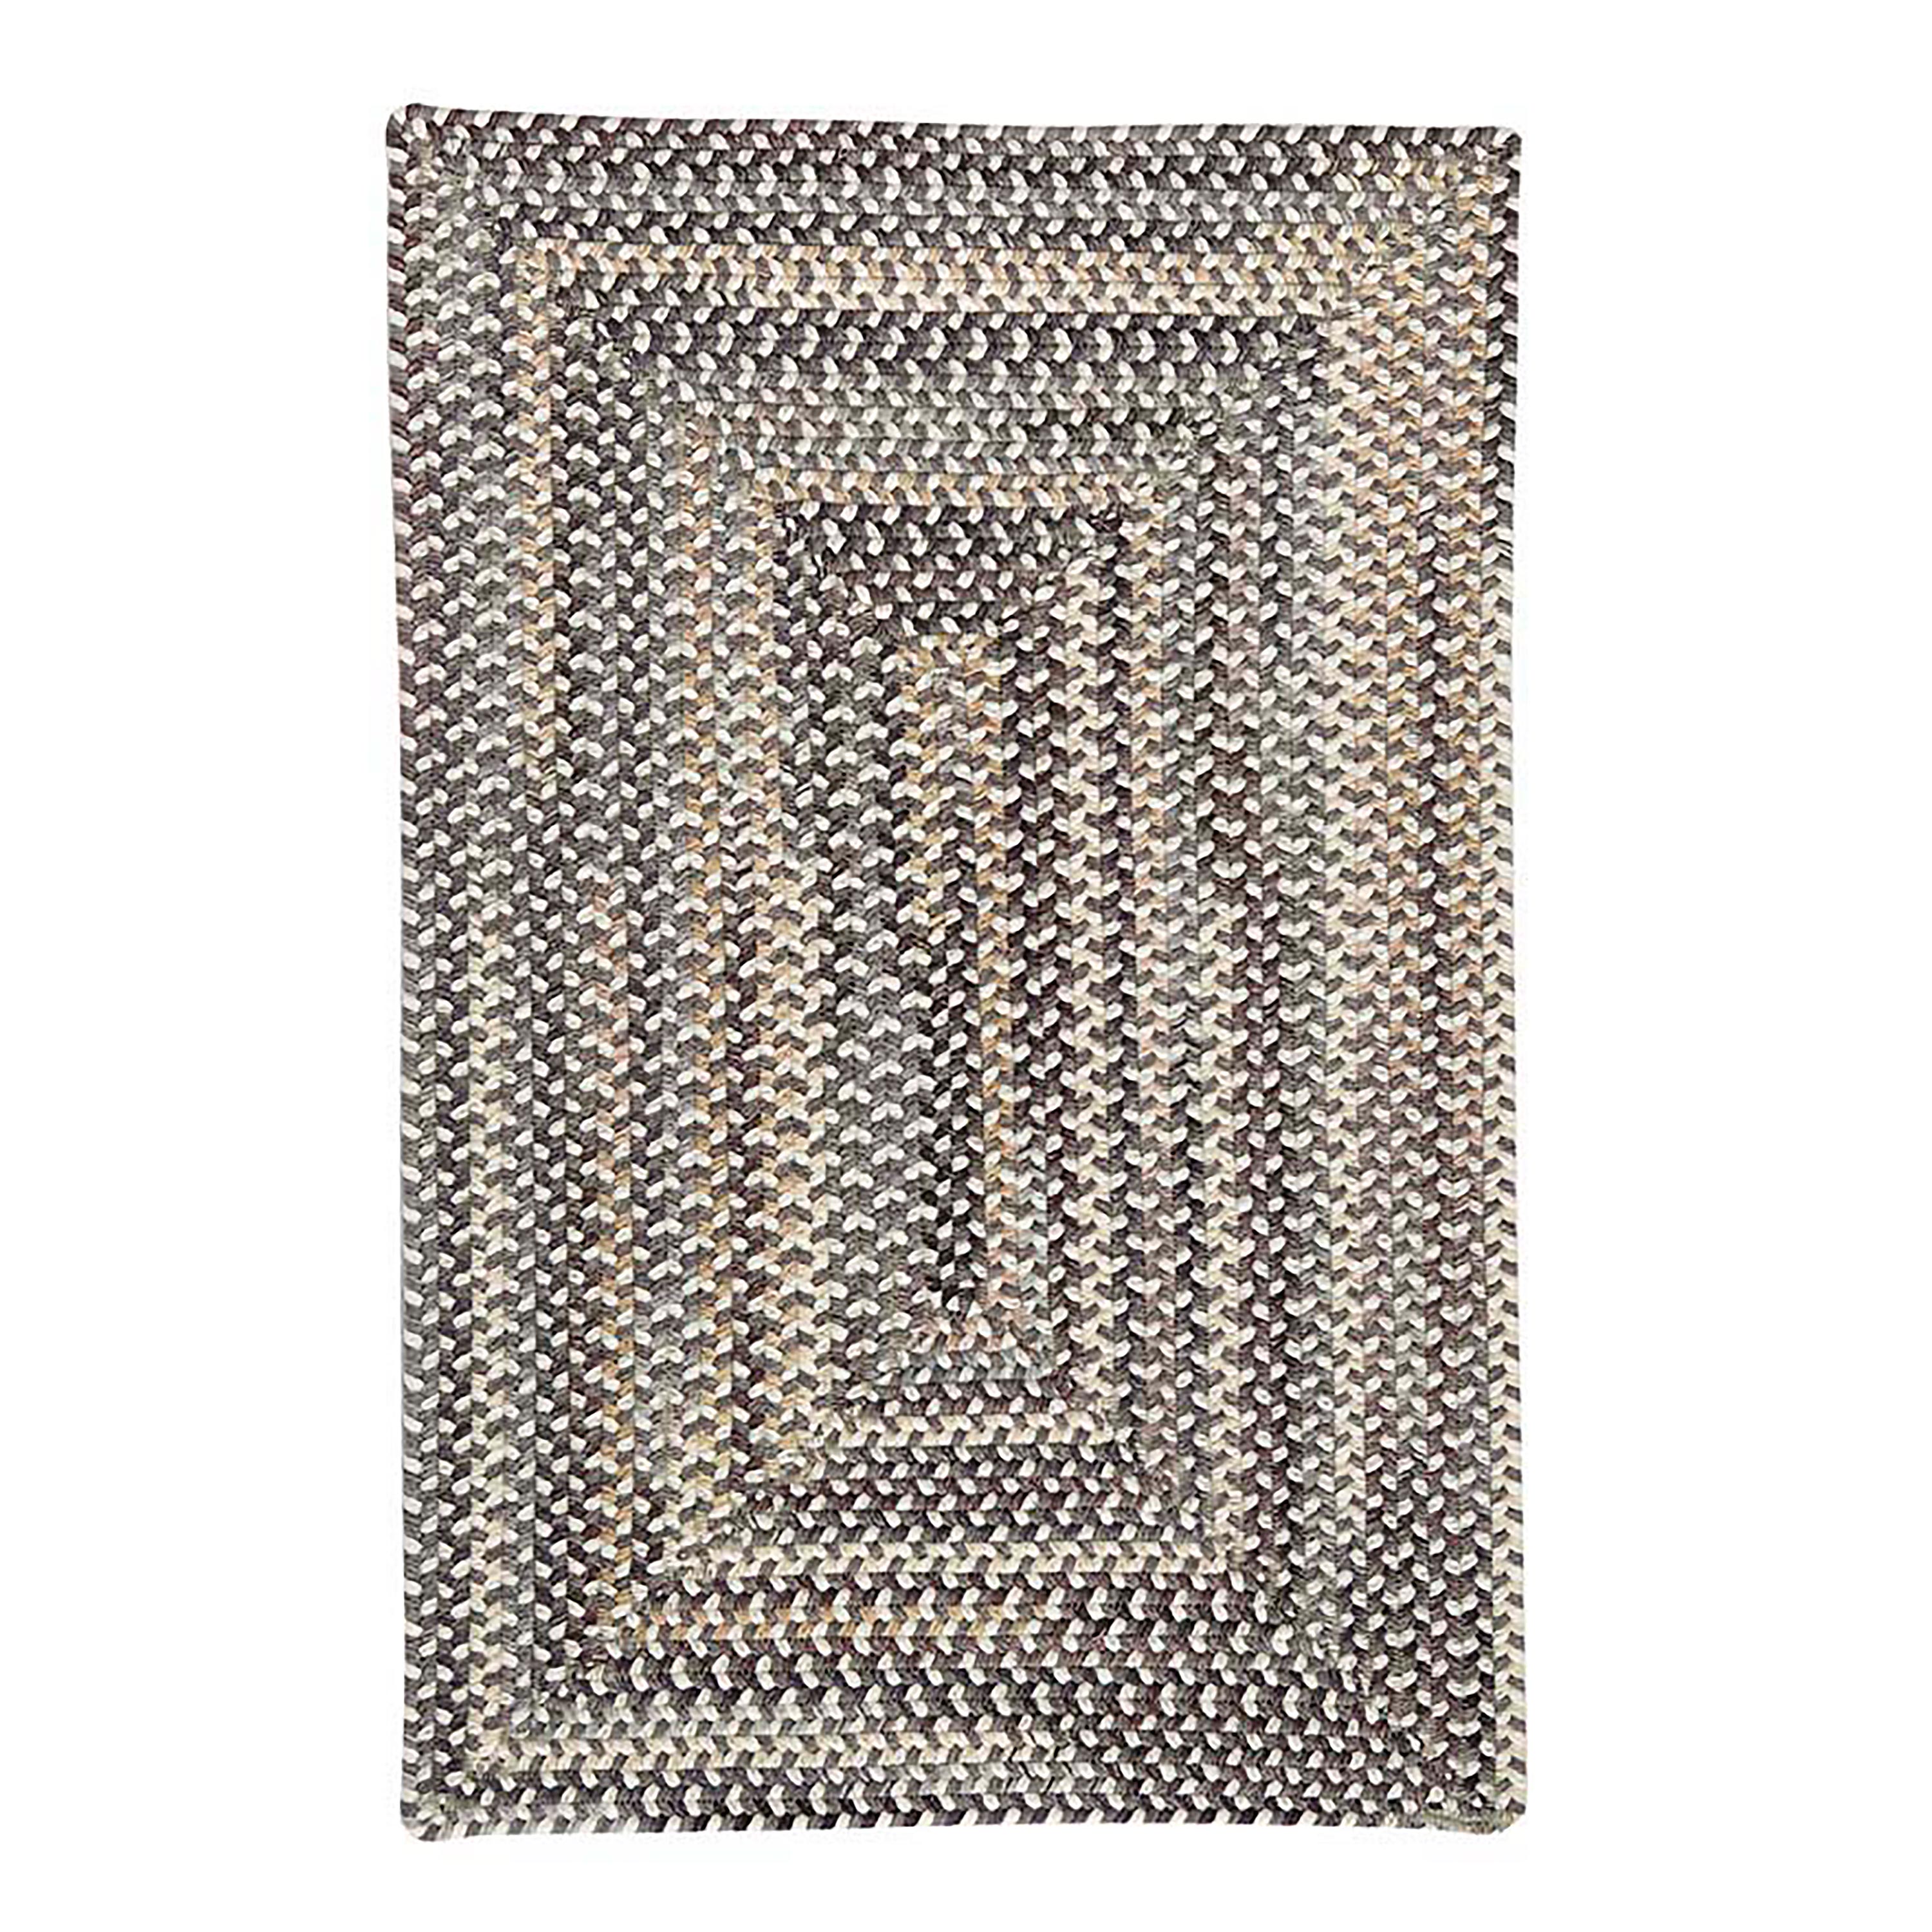 Image of 7' x 9' Bear Creek Rectangular Braided Wool & Nylon Blend Rug, Gray